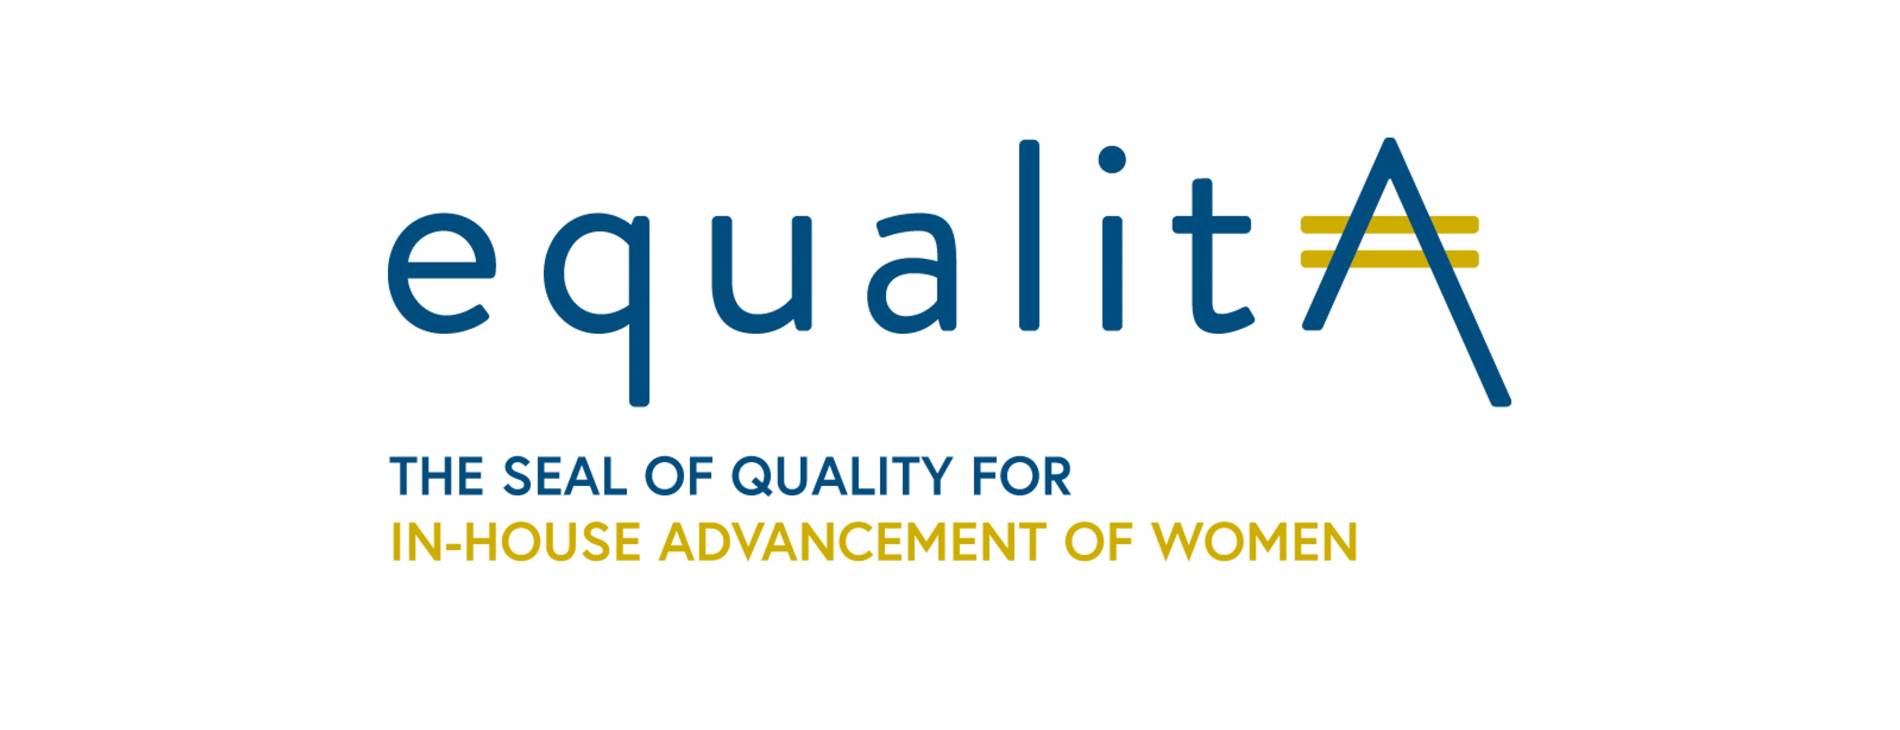 Logo of equalita 